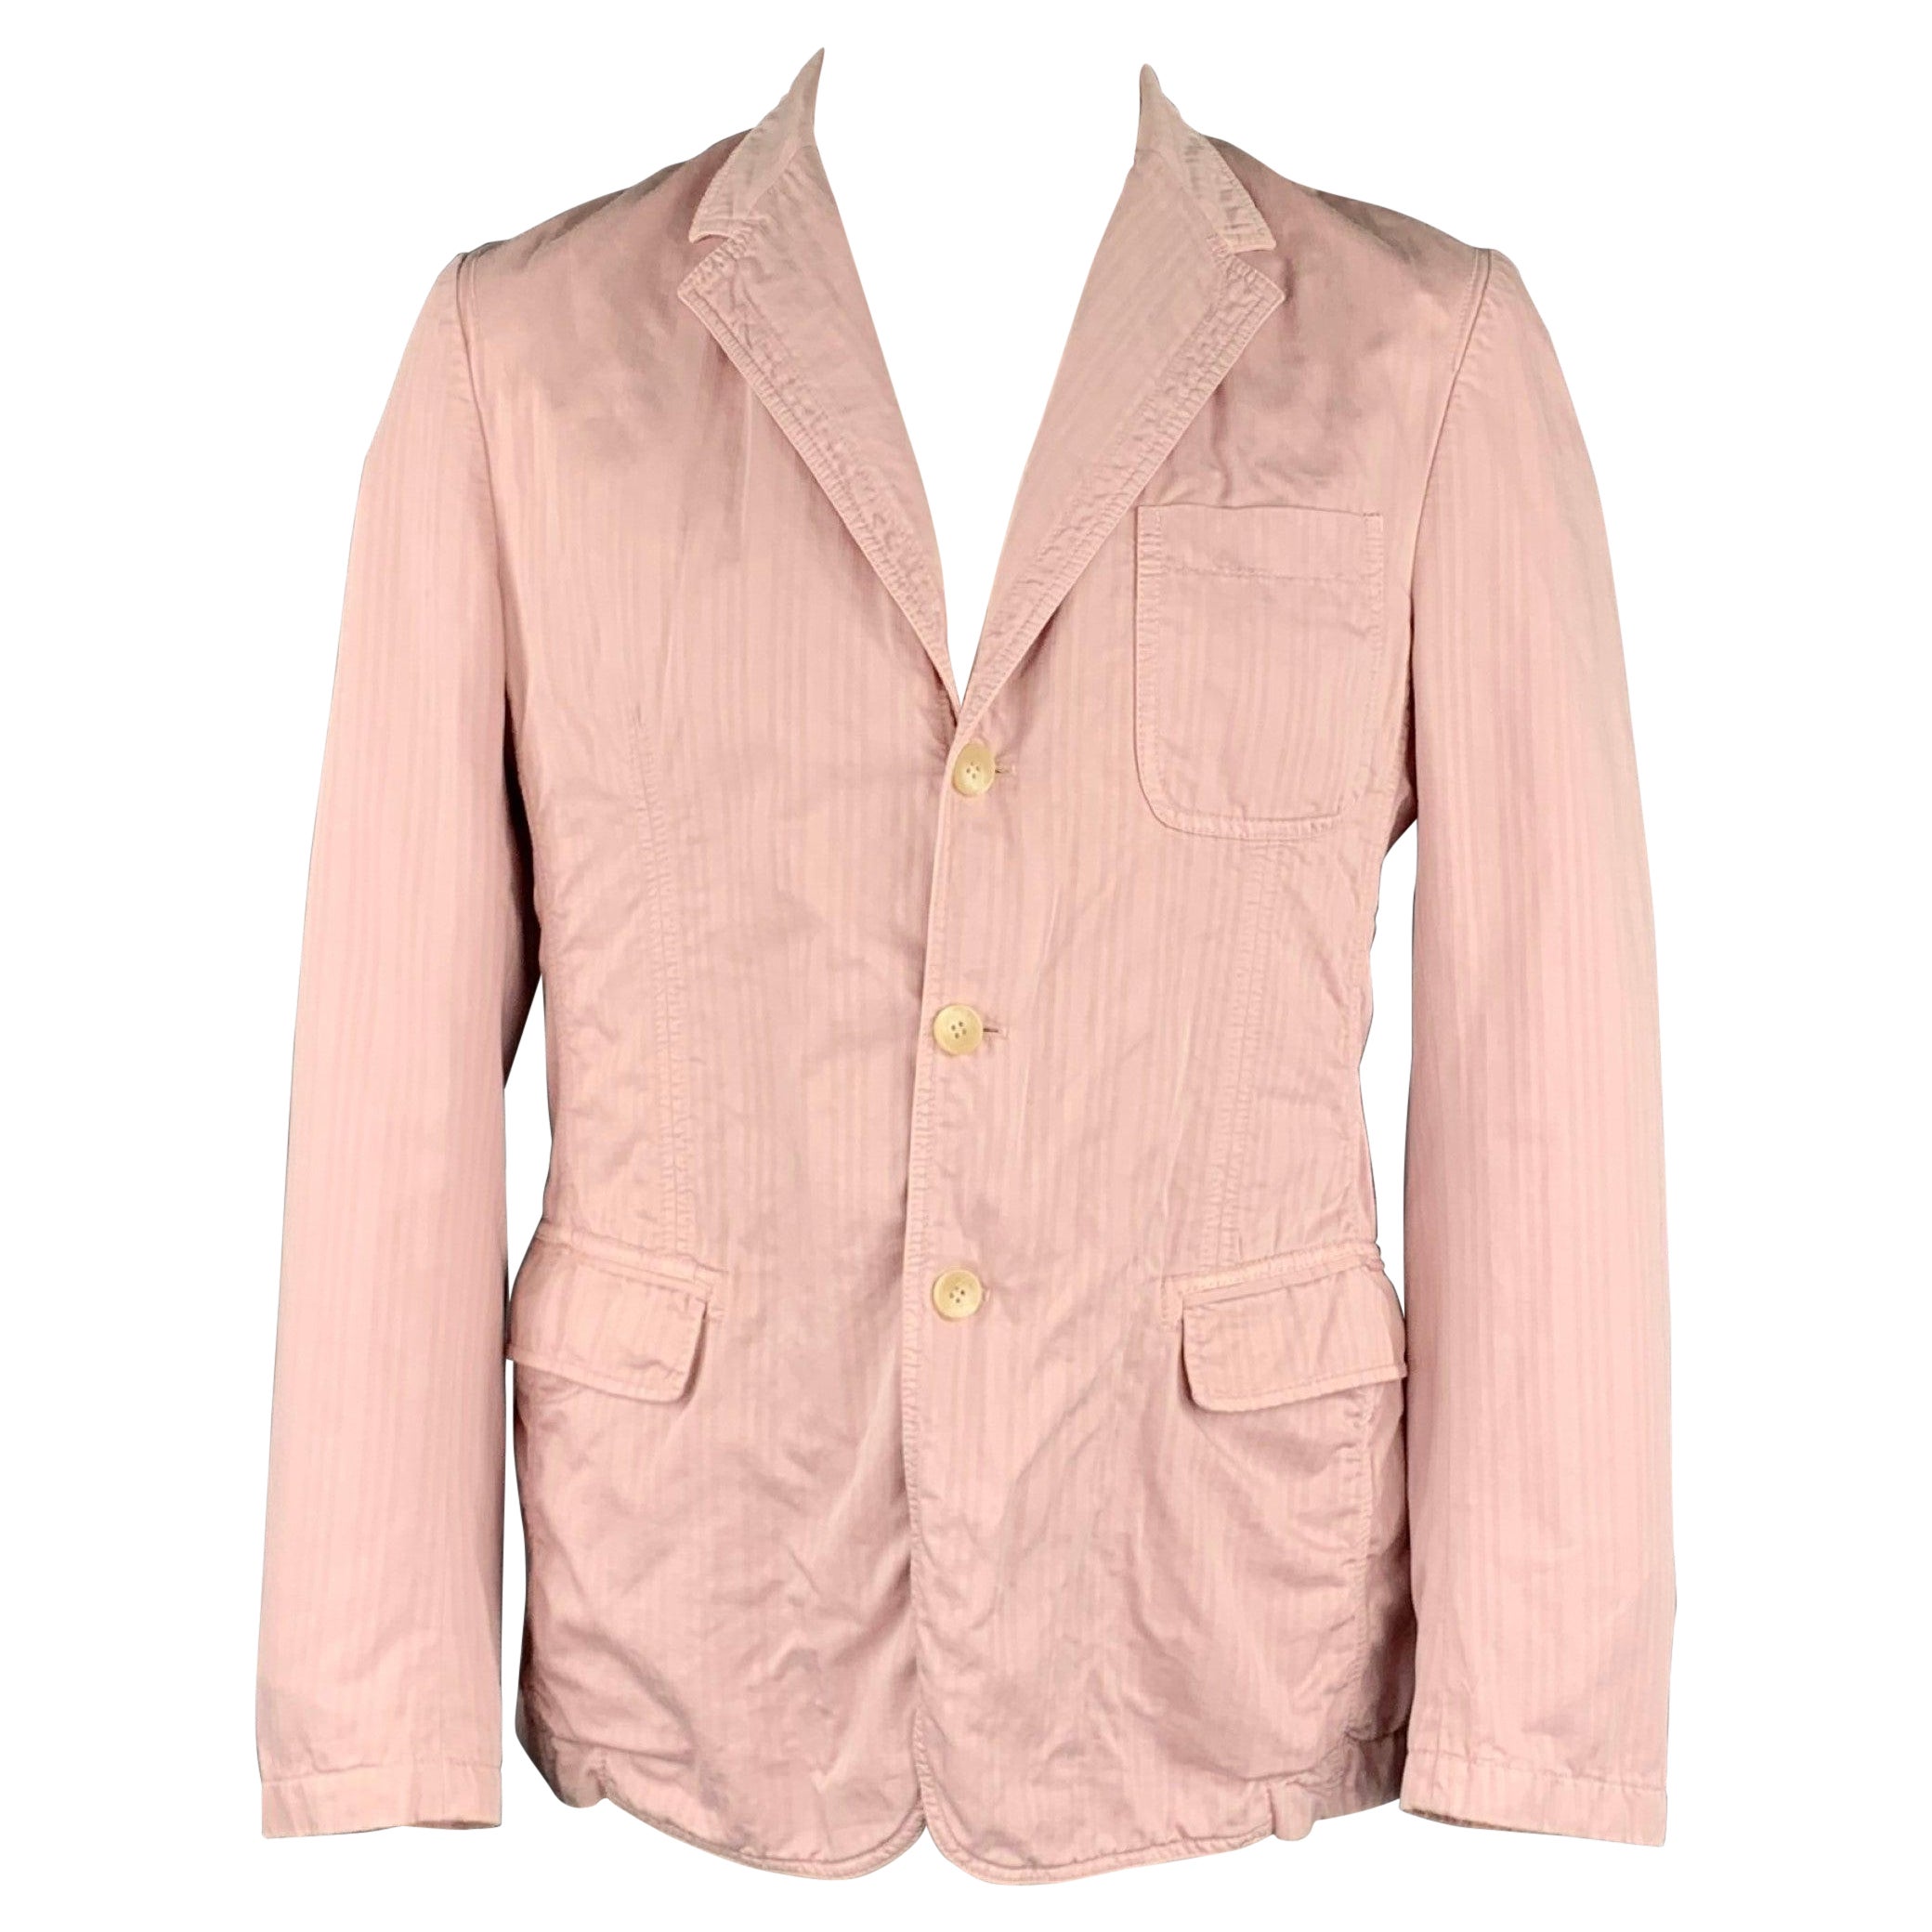 D&G by DOLCE & GABBANA Size 42 Rose Stripe Cotton Notch Lapel Sport Coat For Sale